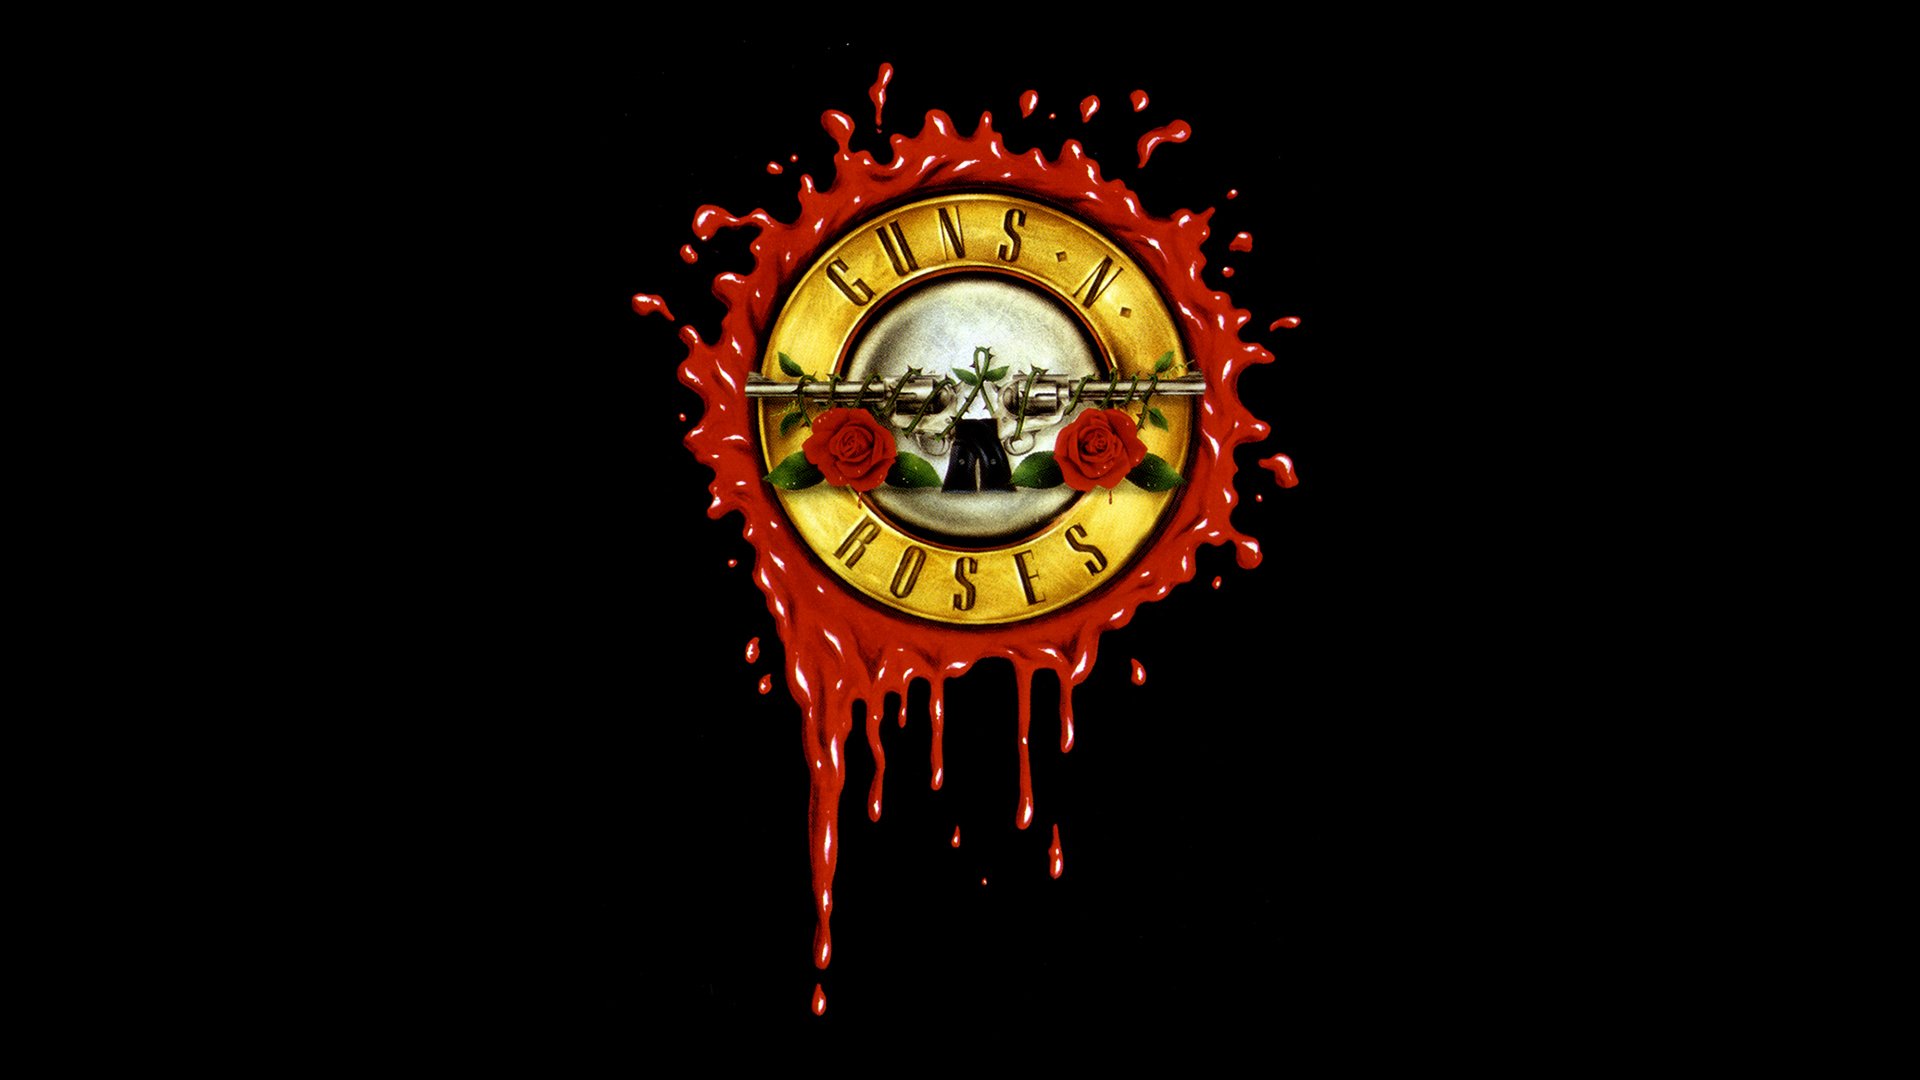 Hd Wallpaper - Guns N Roses South Africa 2018 , HD Wallpaper & Backgrounds